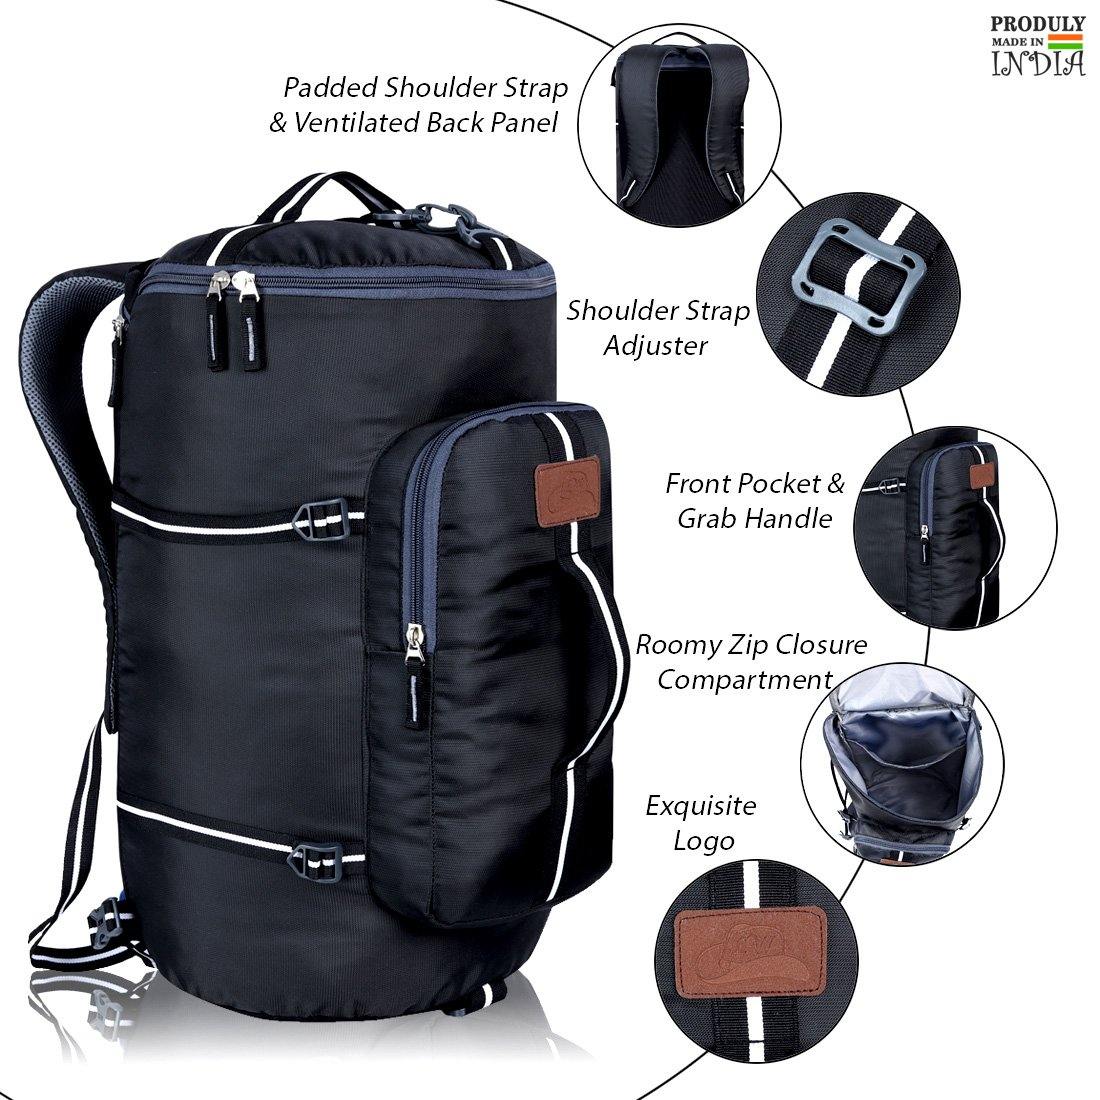 Black Nylon Unisex Casual Adventure Companion Trekking Rucksack Bag